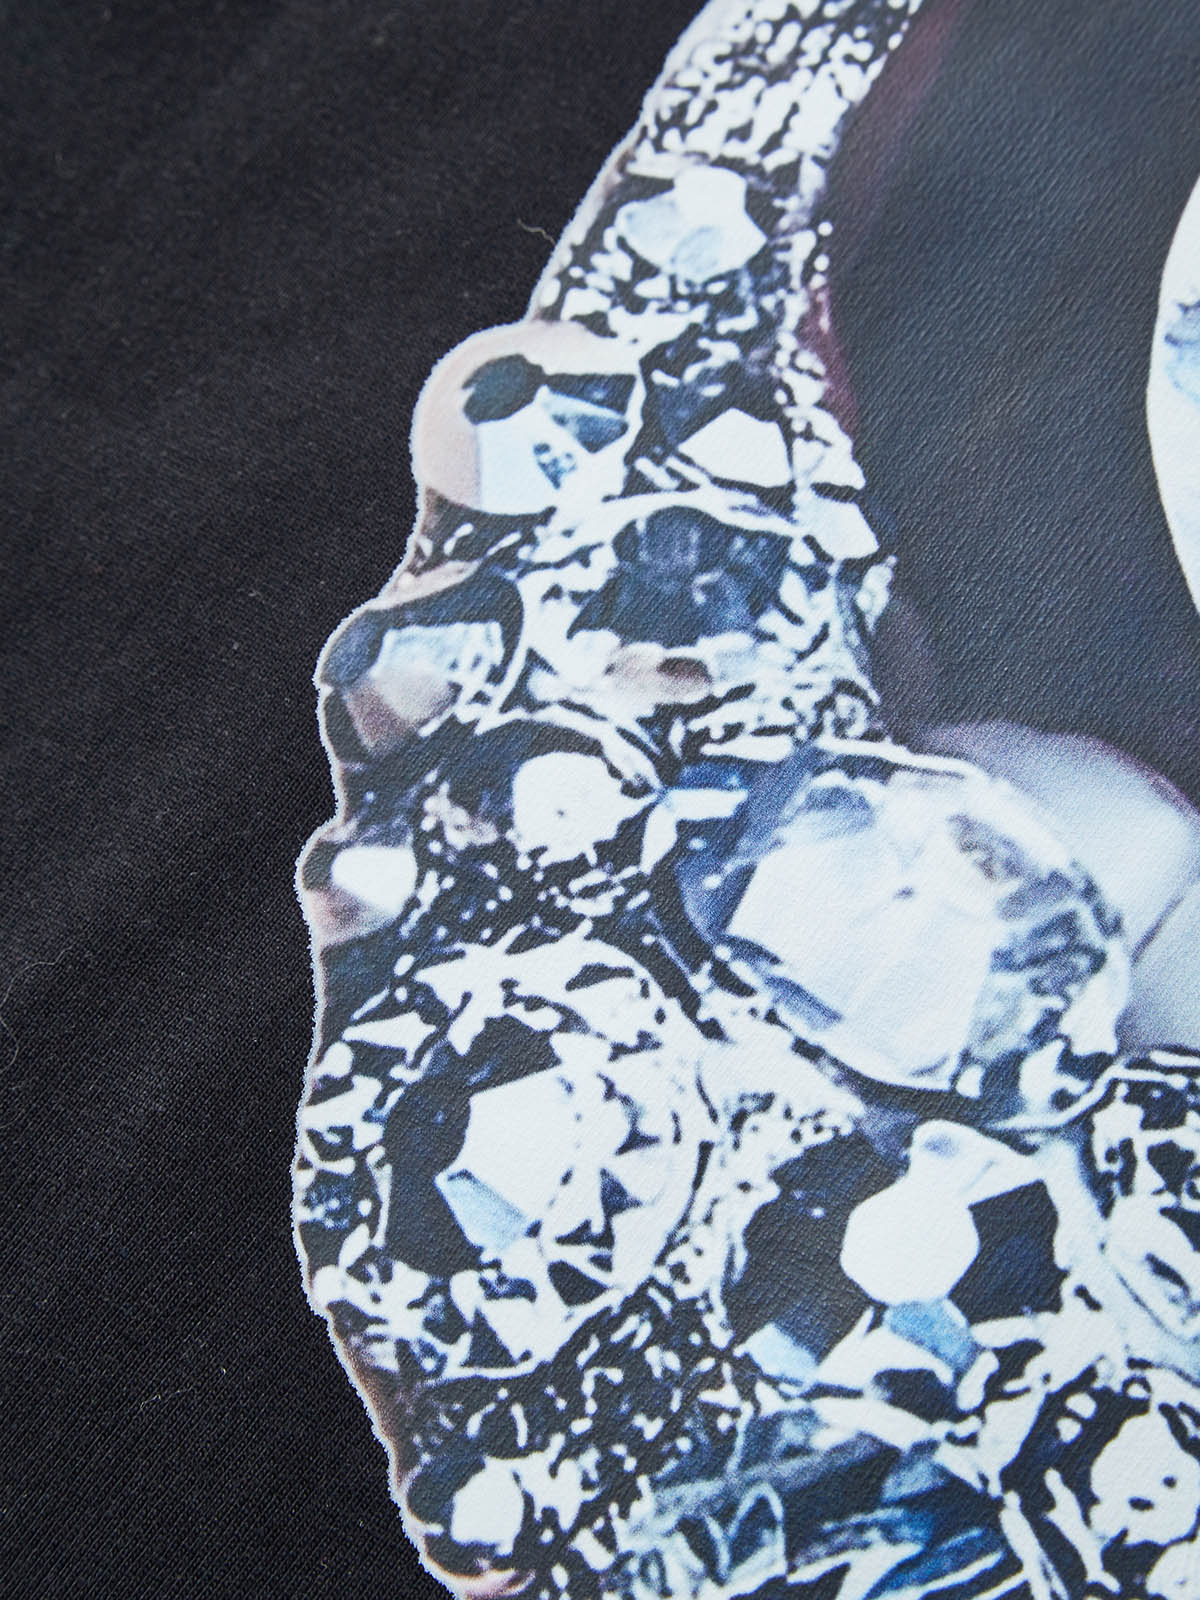 BOUNCE BACK© Noissey オリジナル フルダイヤモンドリップス プリント Tシャツ